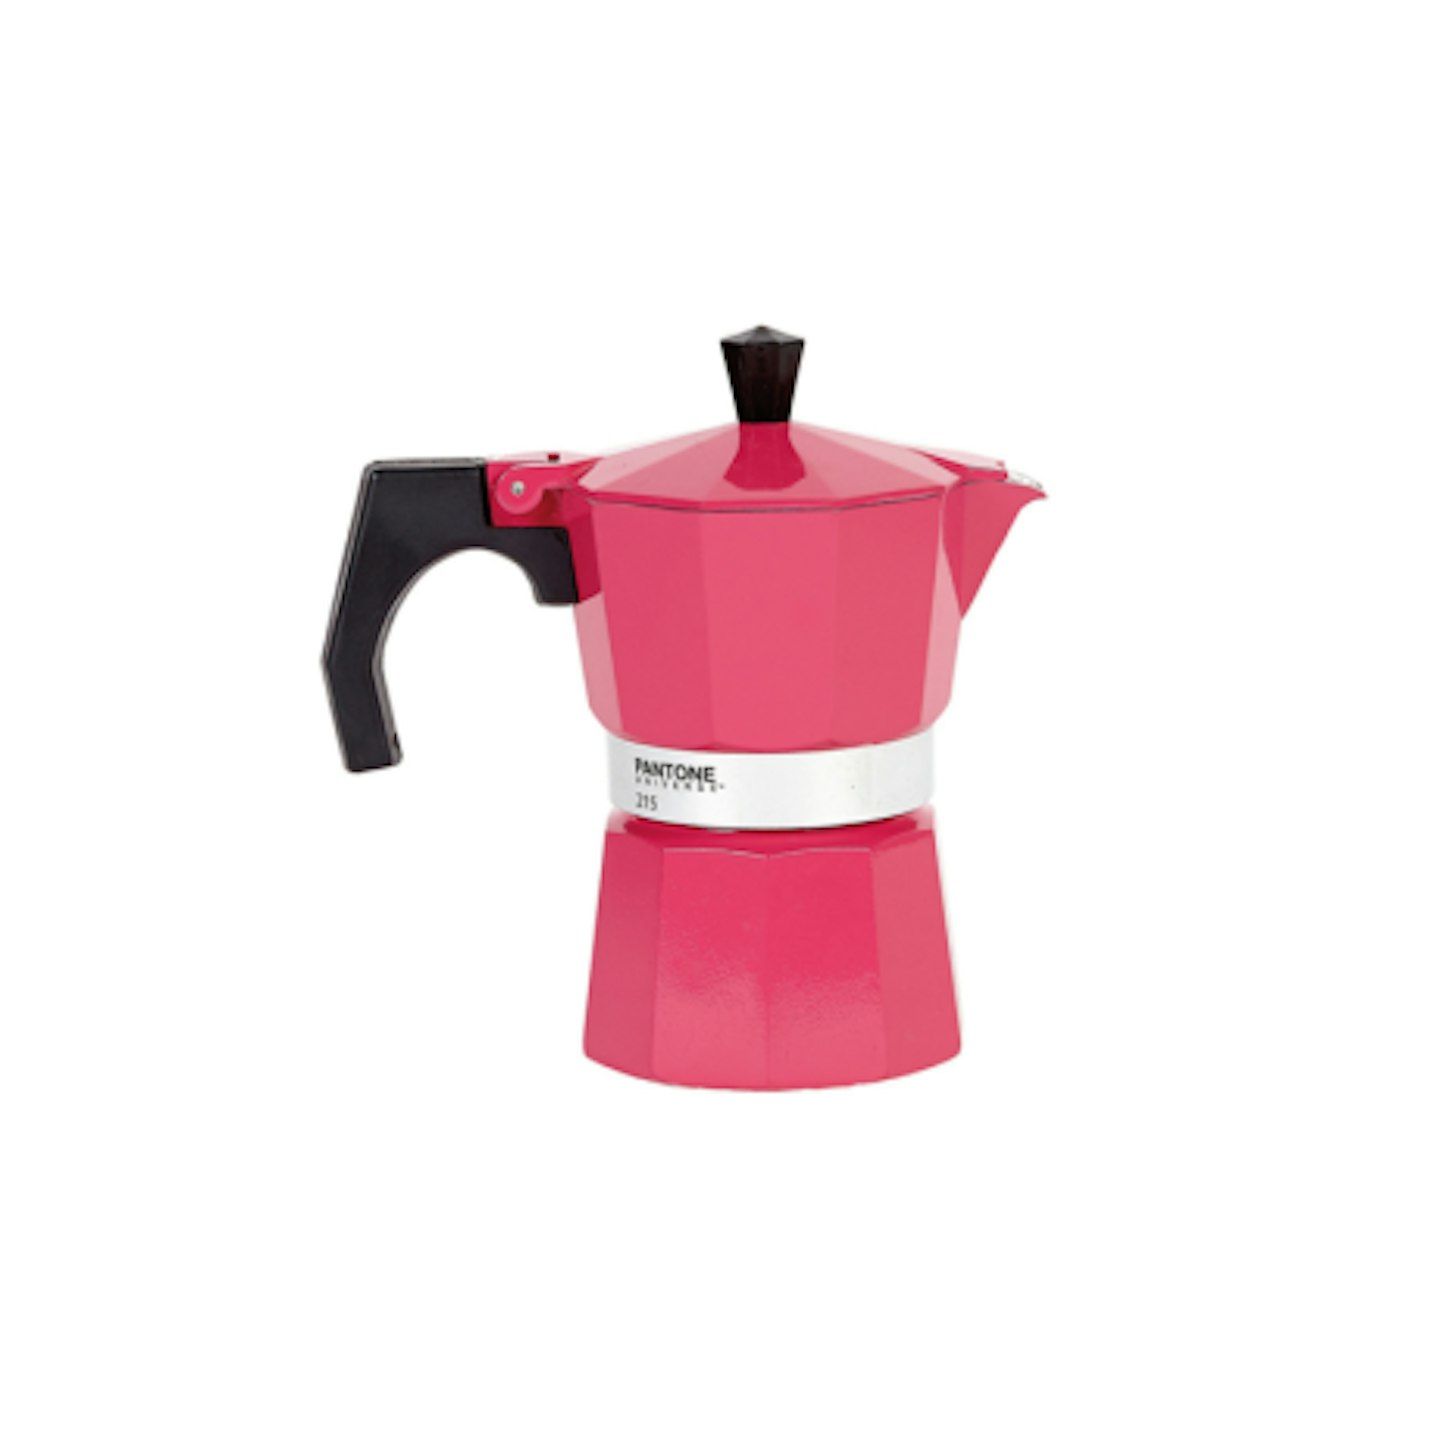 Trouva, Pantone W2 Hot Pink Coffee Maker, £20; trouva.com